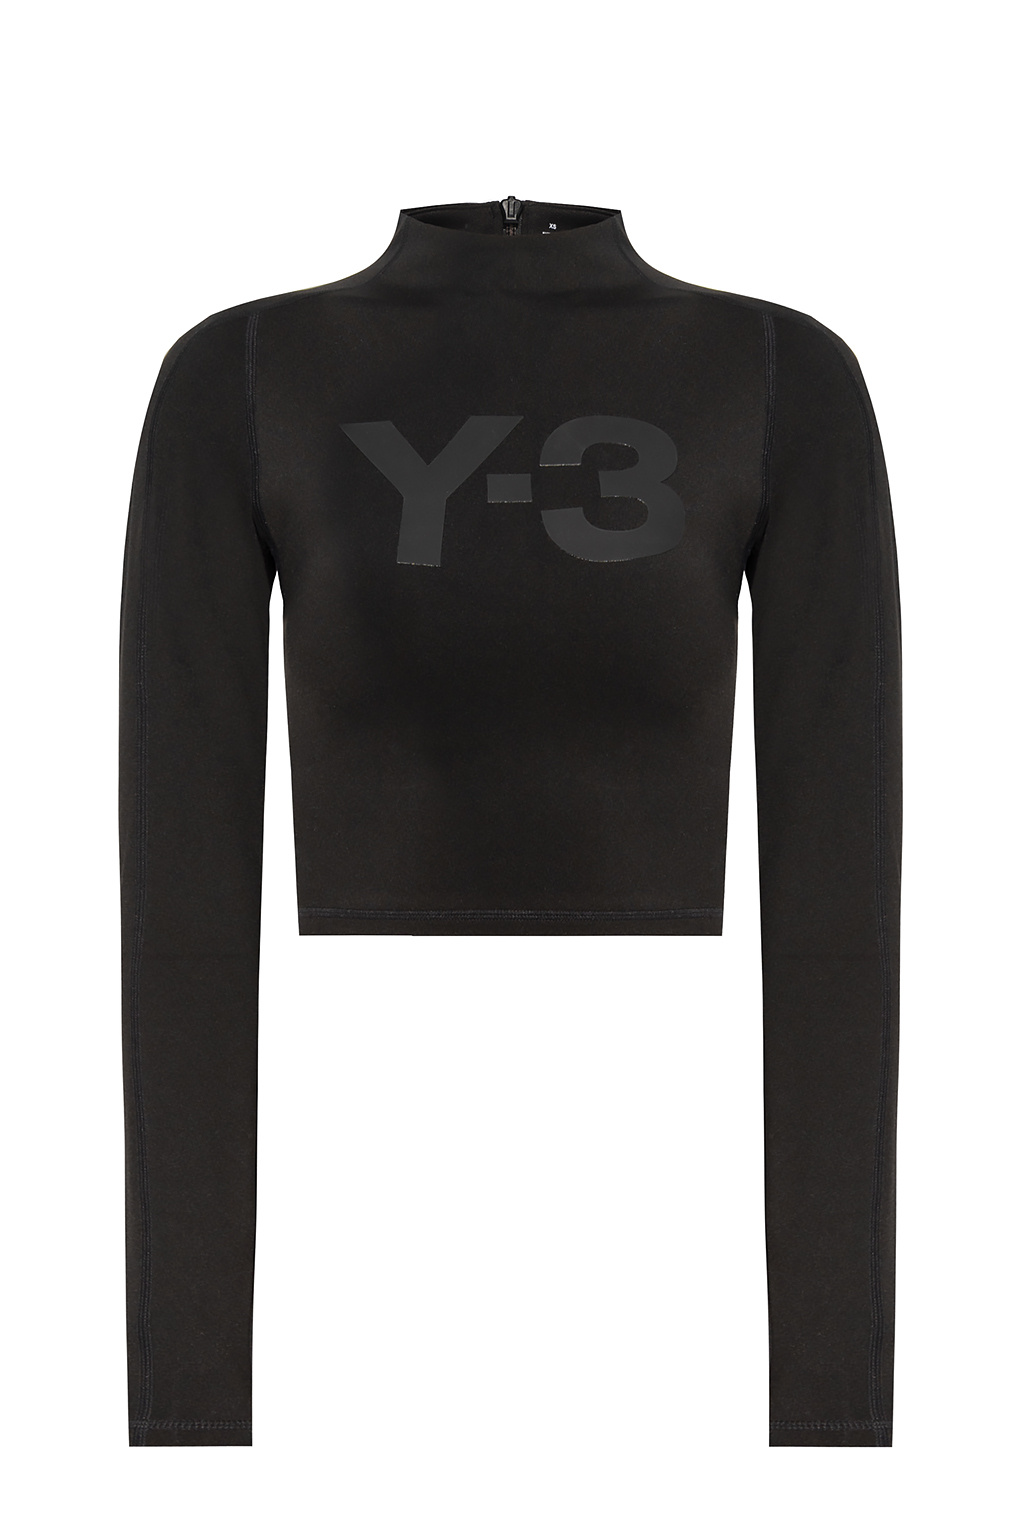 Y-3 Yohji Yamamoto Training top with logo